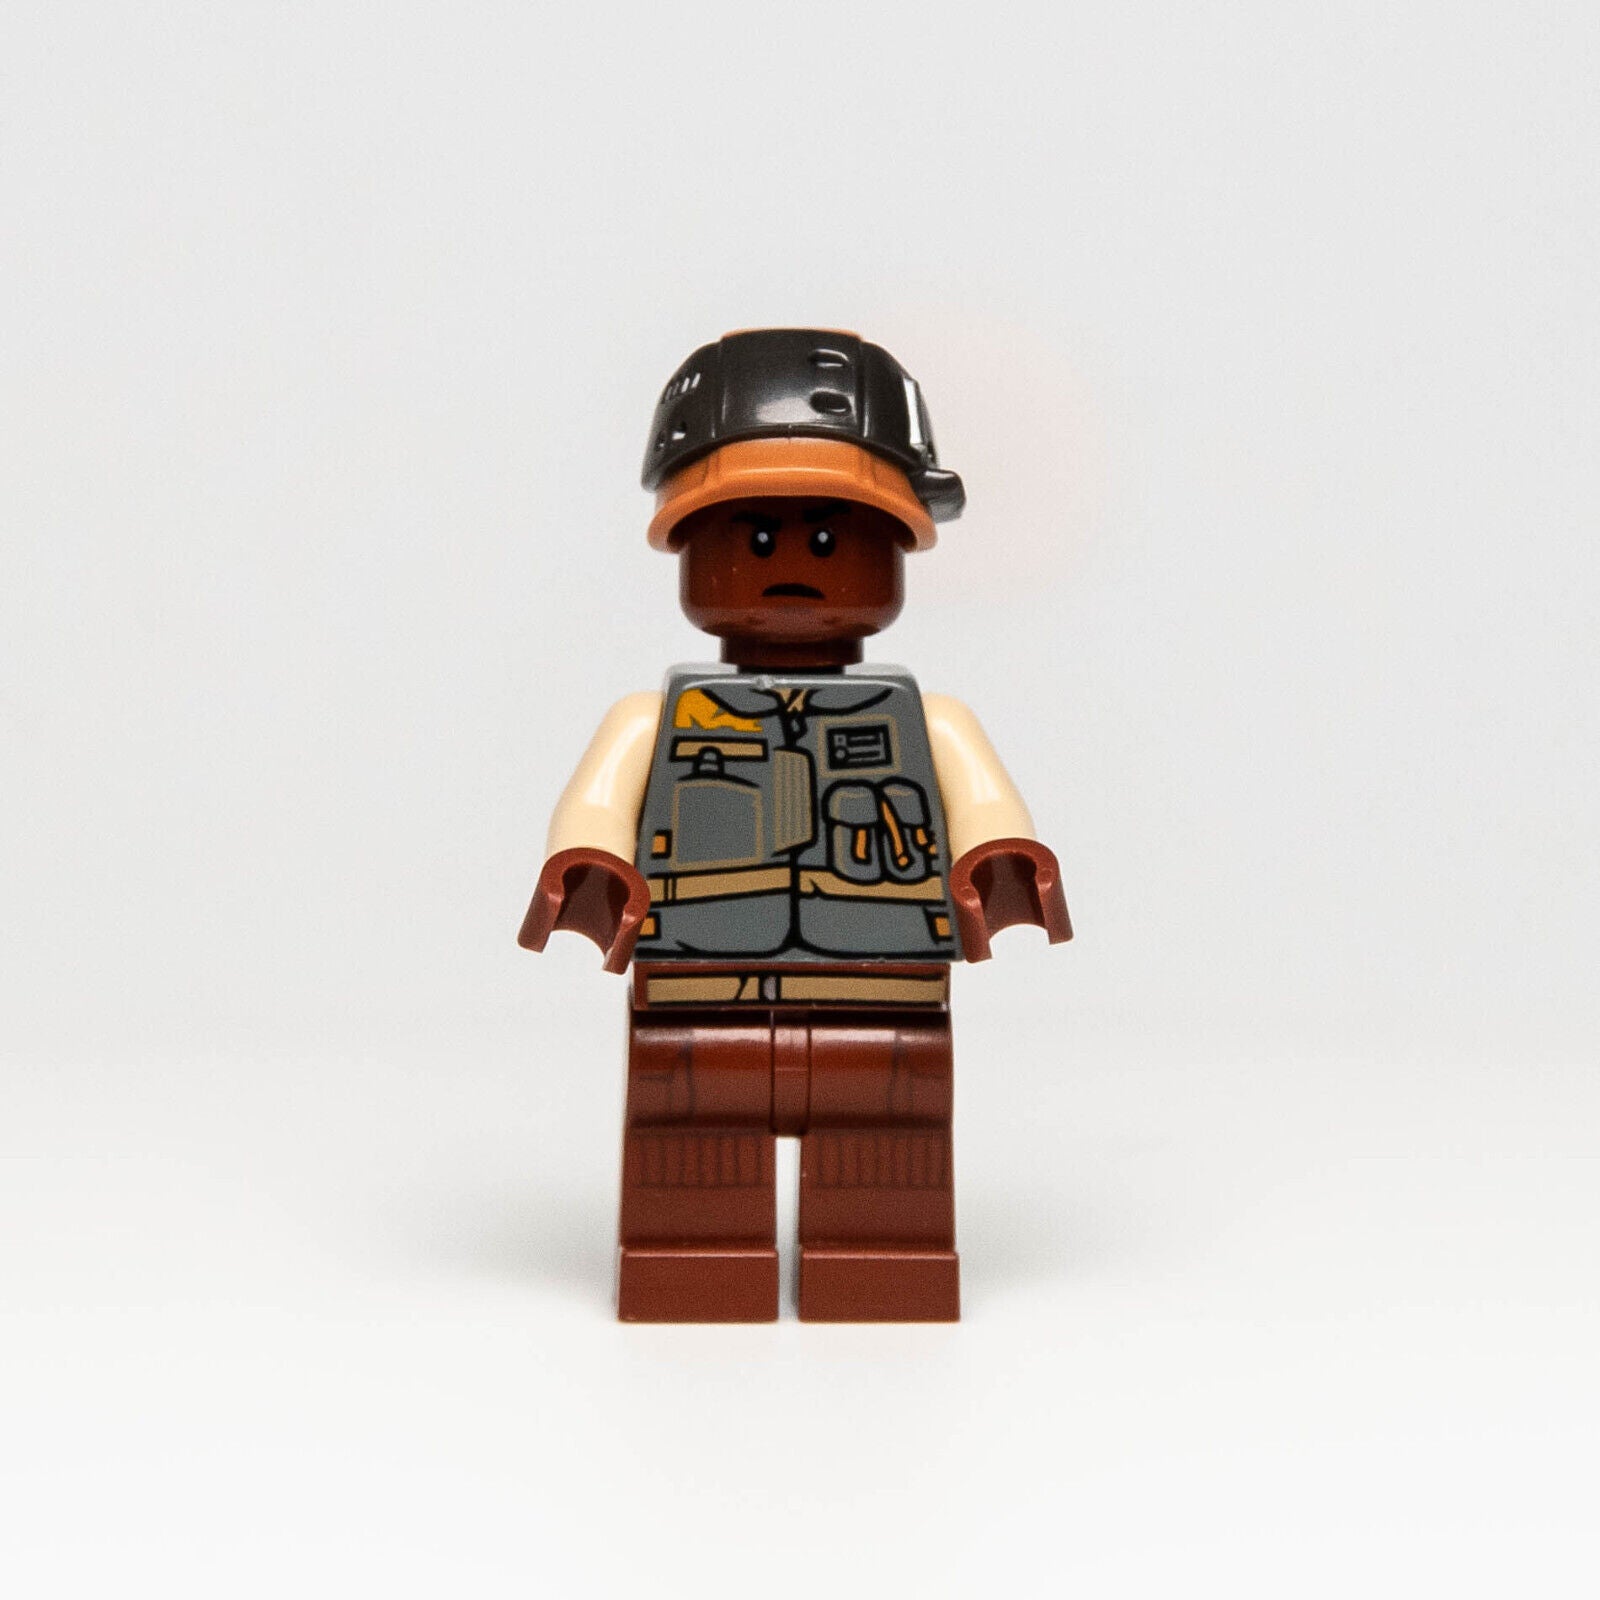 LEGO Star Wars Rogue One: Rebel Trooper Lieutenant Sefla sw0784 75153 AT-ST 2016